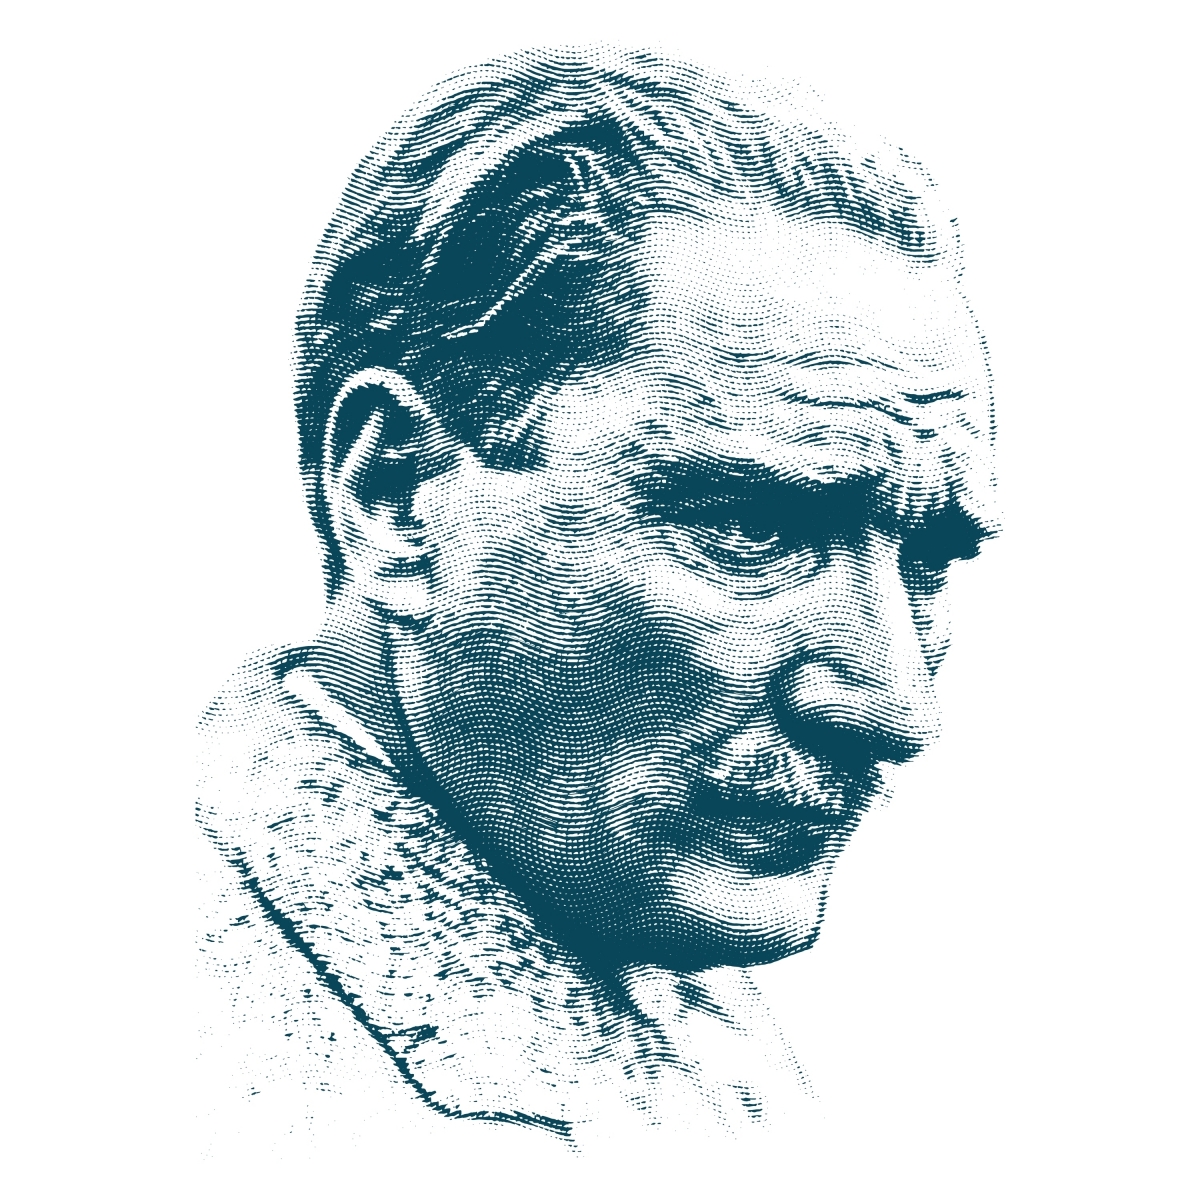 Portrait of Atatürk by ZMD Design for Shutterstock